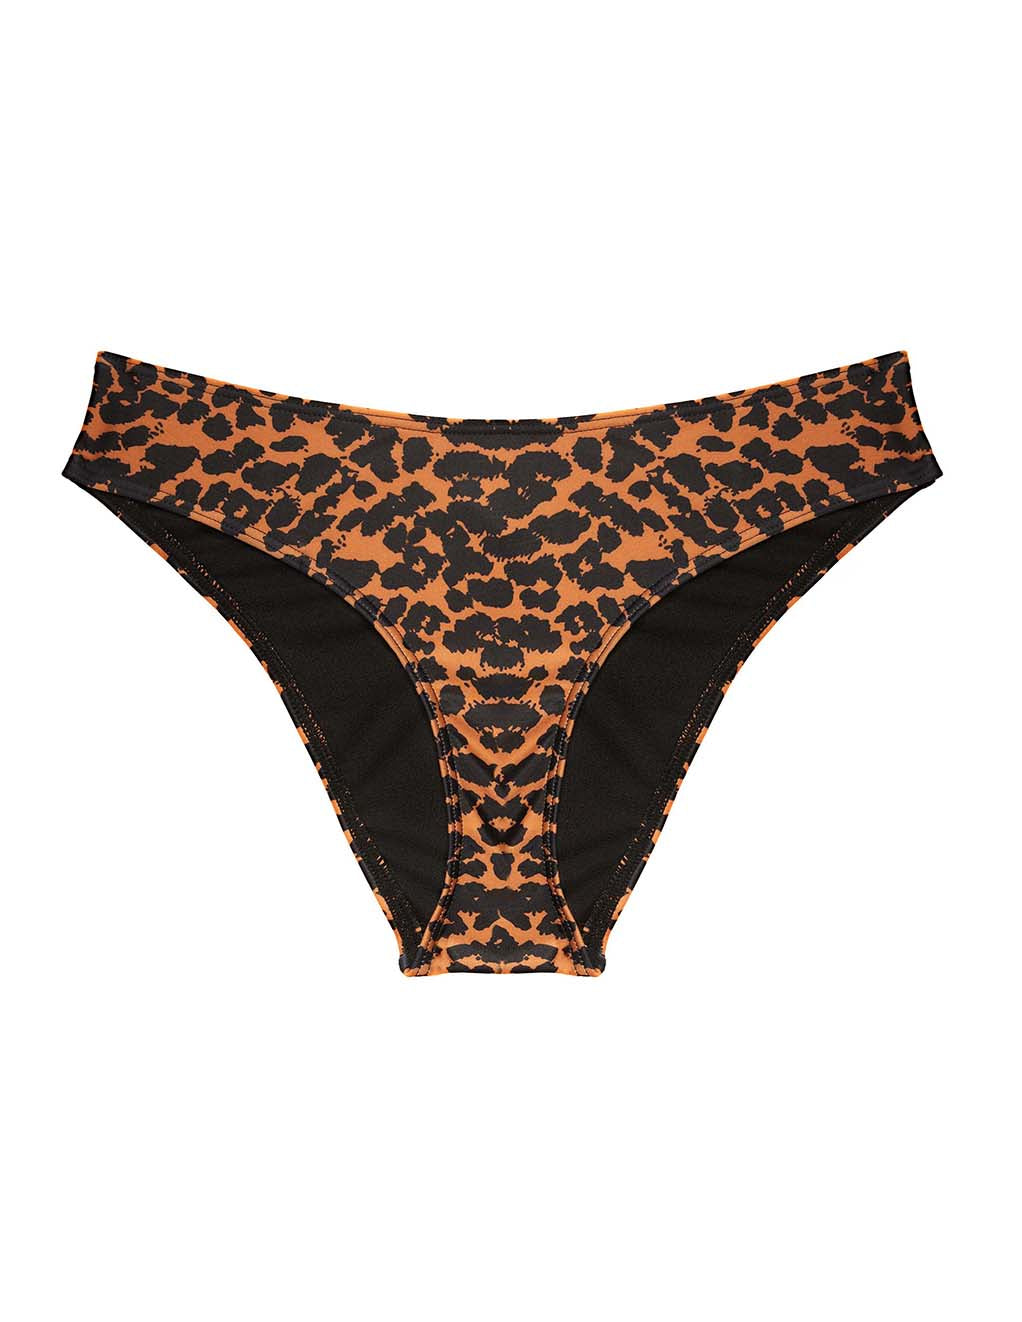 HUSTLER Cheeky Bikini Shortie- Leopard- Front Main